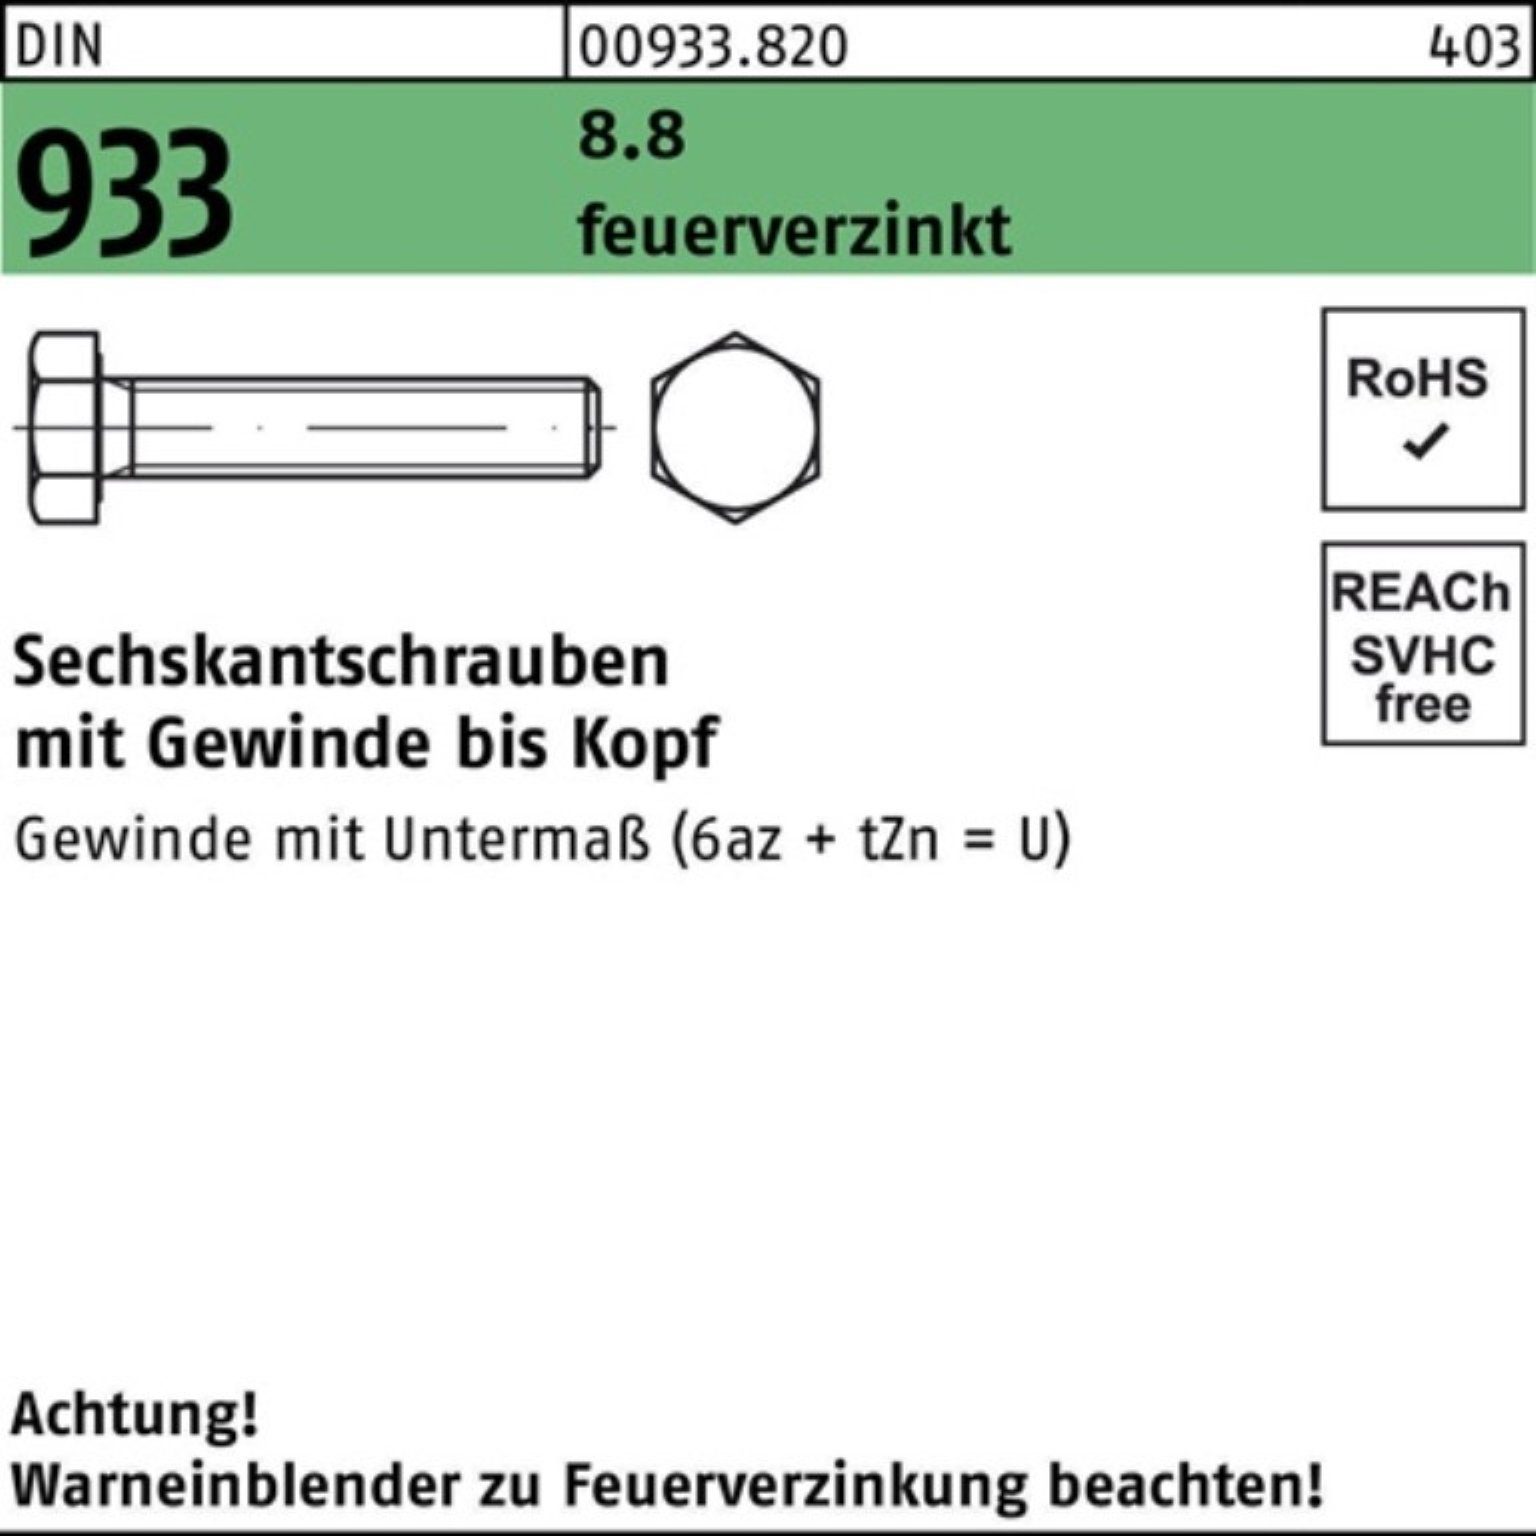 Top-Universität Reyher Sechskantschraube Pack VG 200er 933 DIN feuerverz. 200 M8x Sechskantschraube 10 Stü 8.8